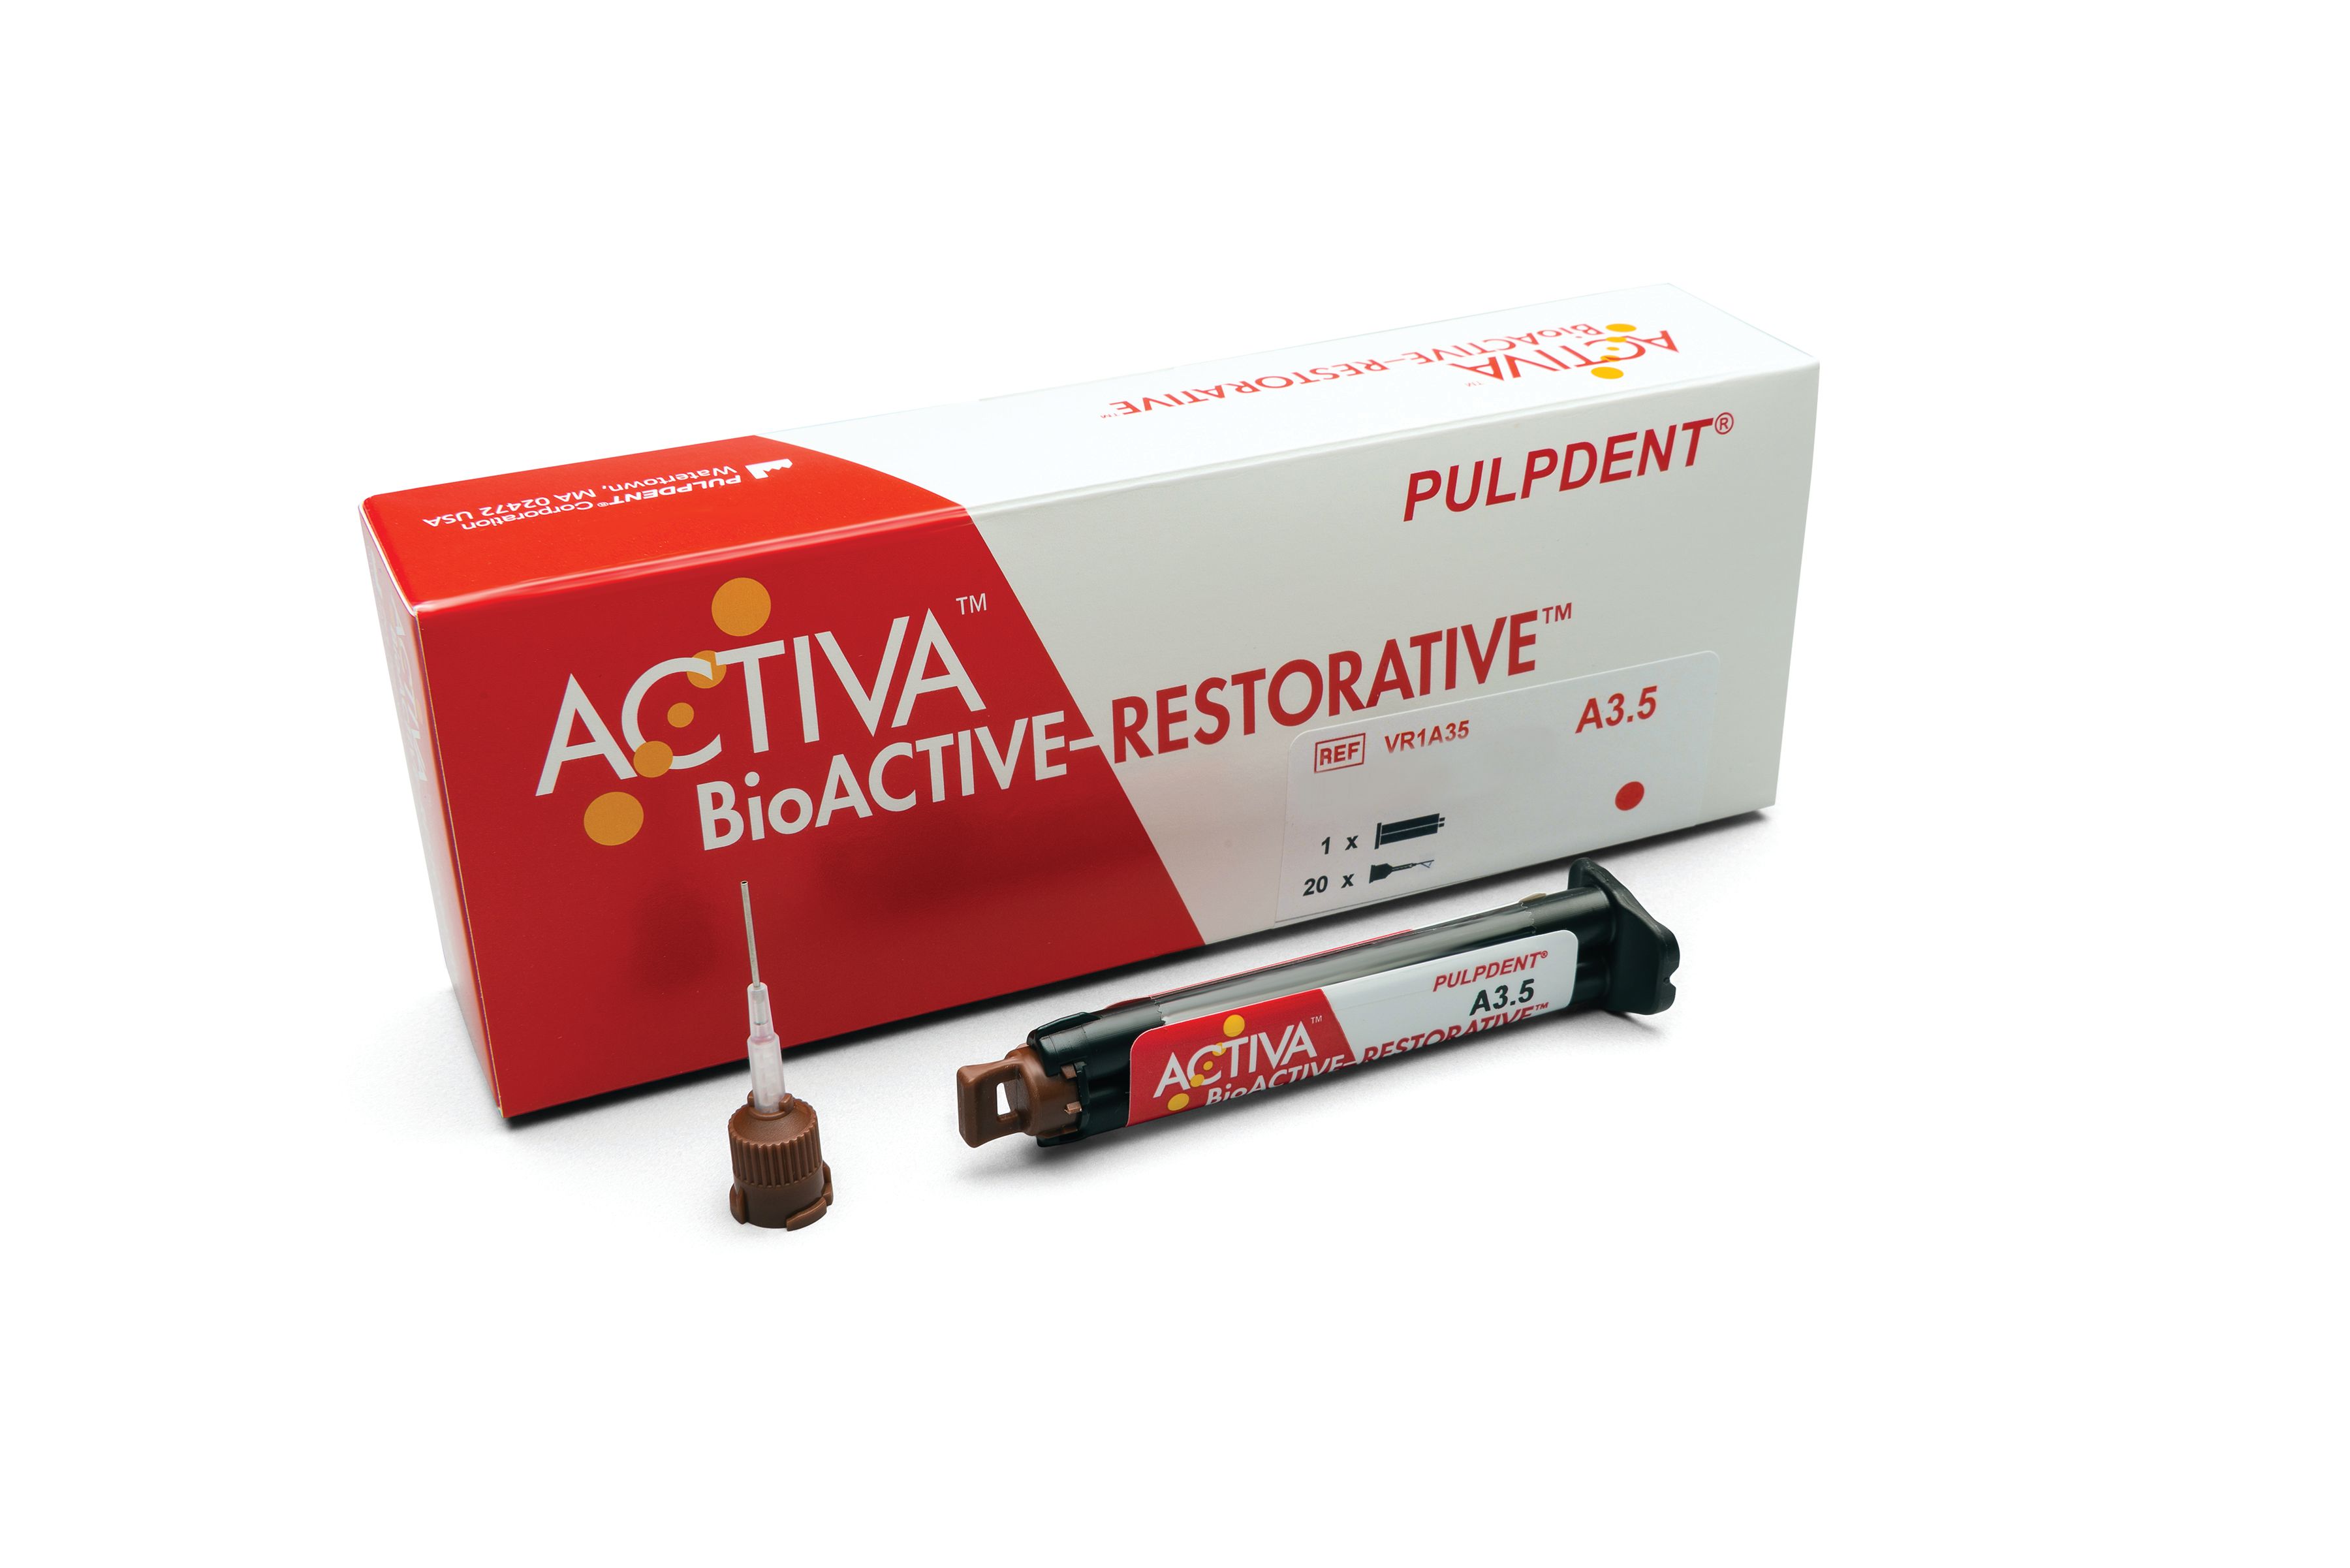 ACTIVA™ BioACTIVE-RESTORATIVE